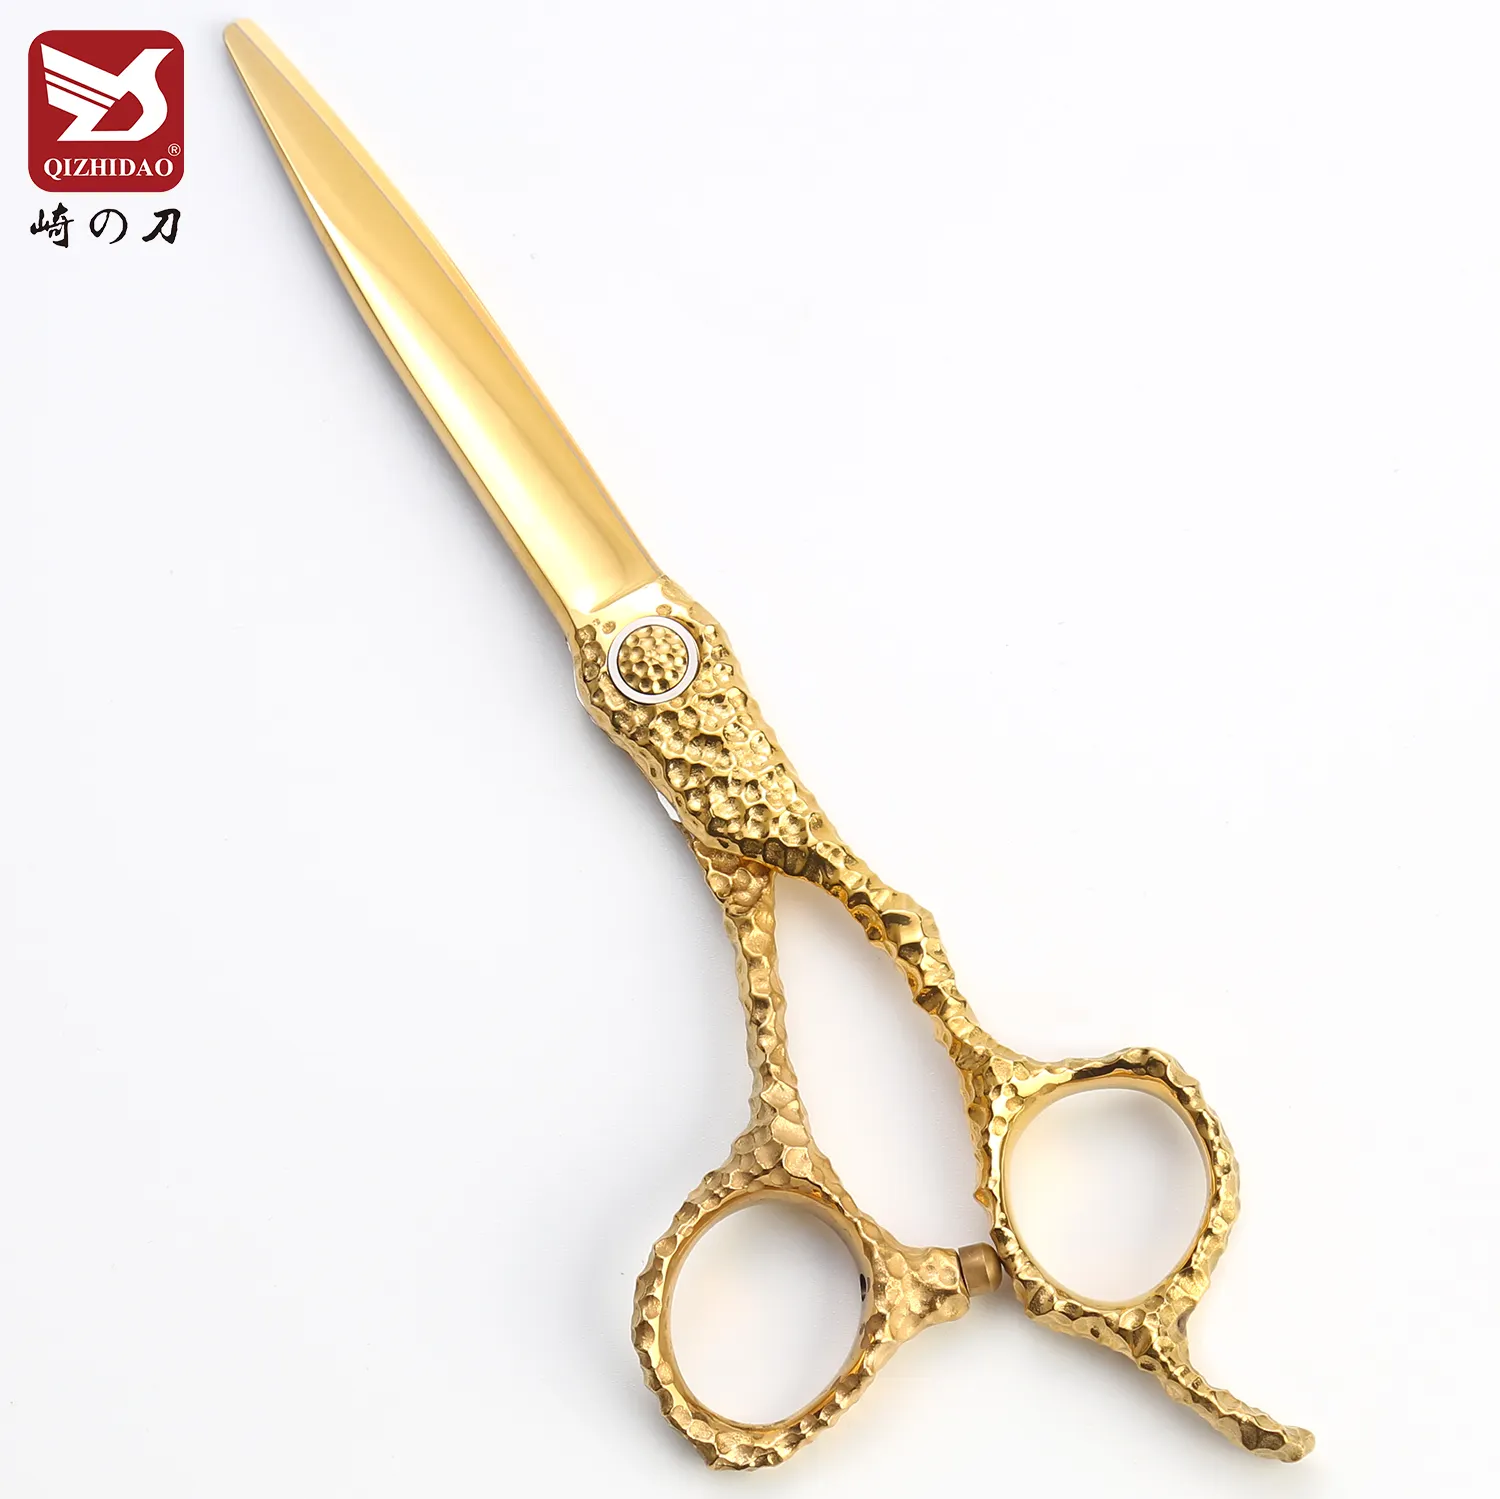 CNC Mizutani Schere Premium Japan VG10 Kobalt Gold Salon Schere Profession elle Friseur Haars chere